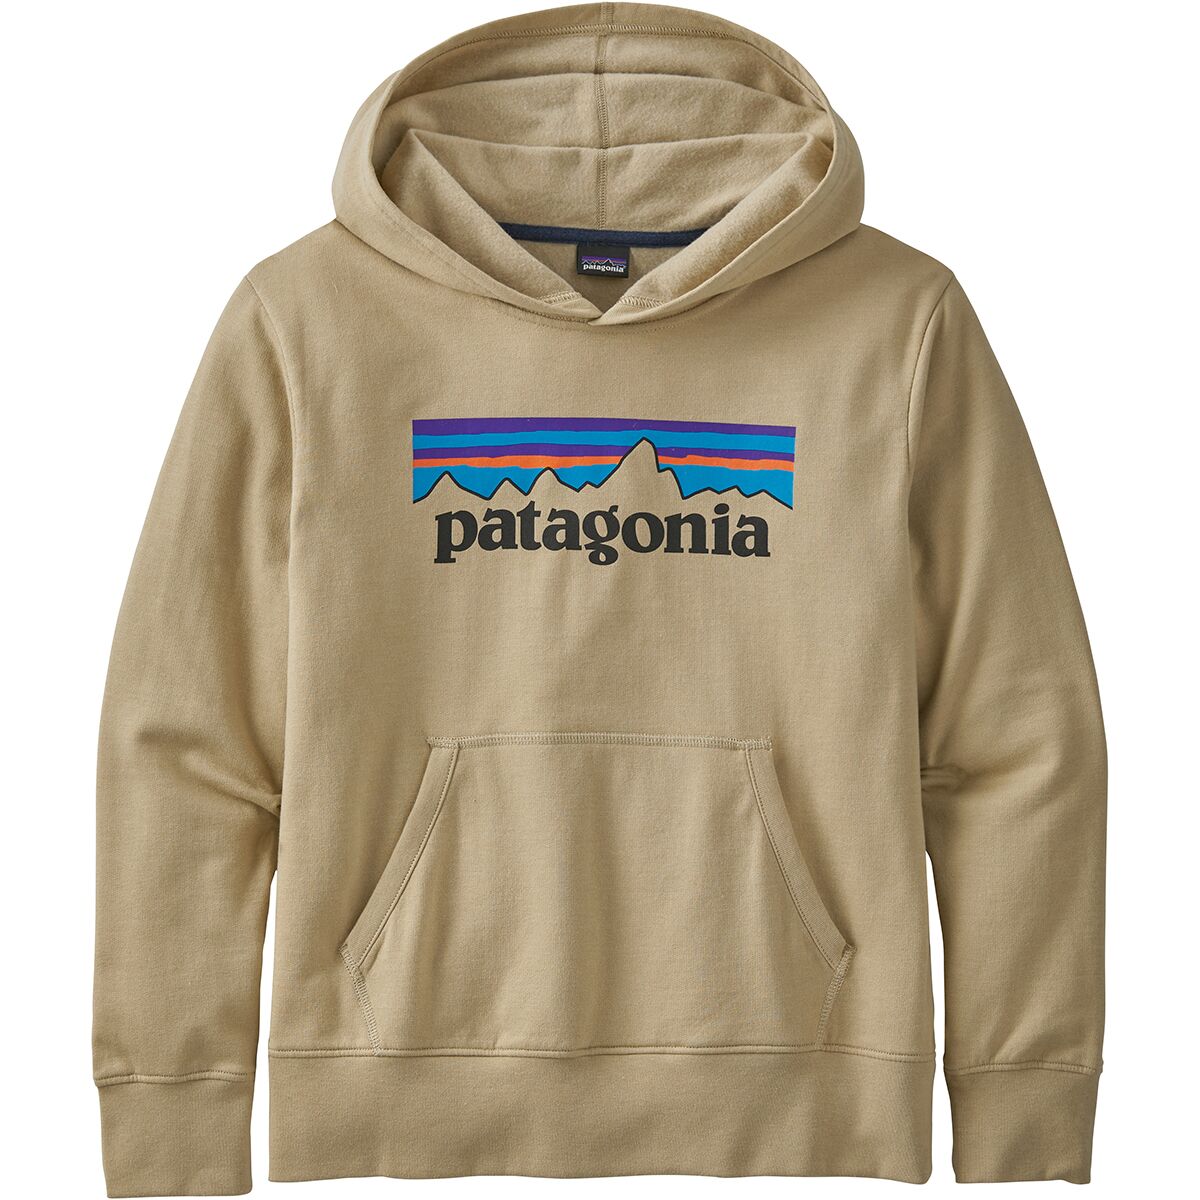 Patagonia Lightweight Graphic Hoodie Sweatshirt - Girls'